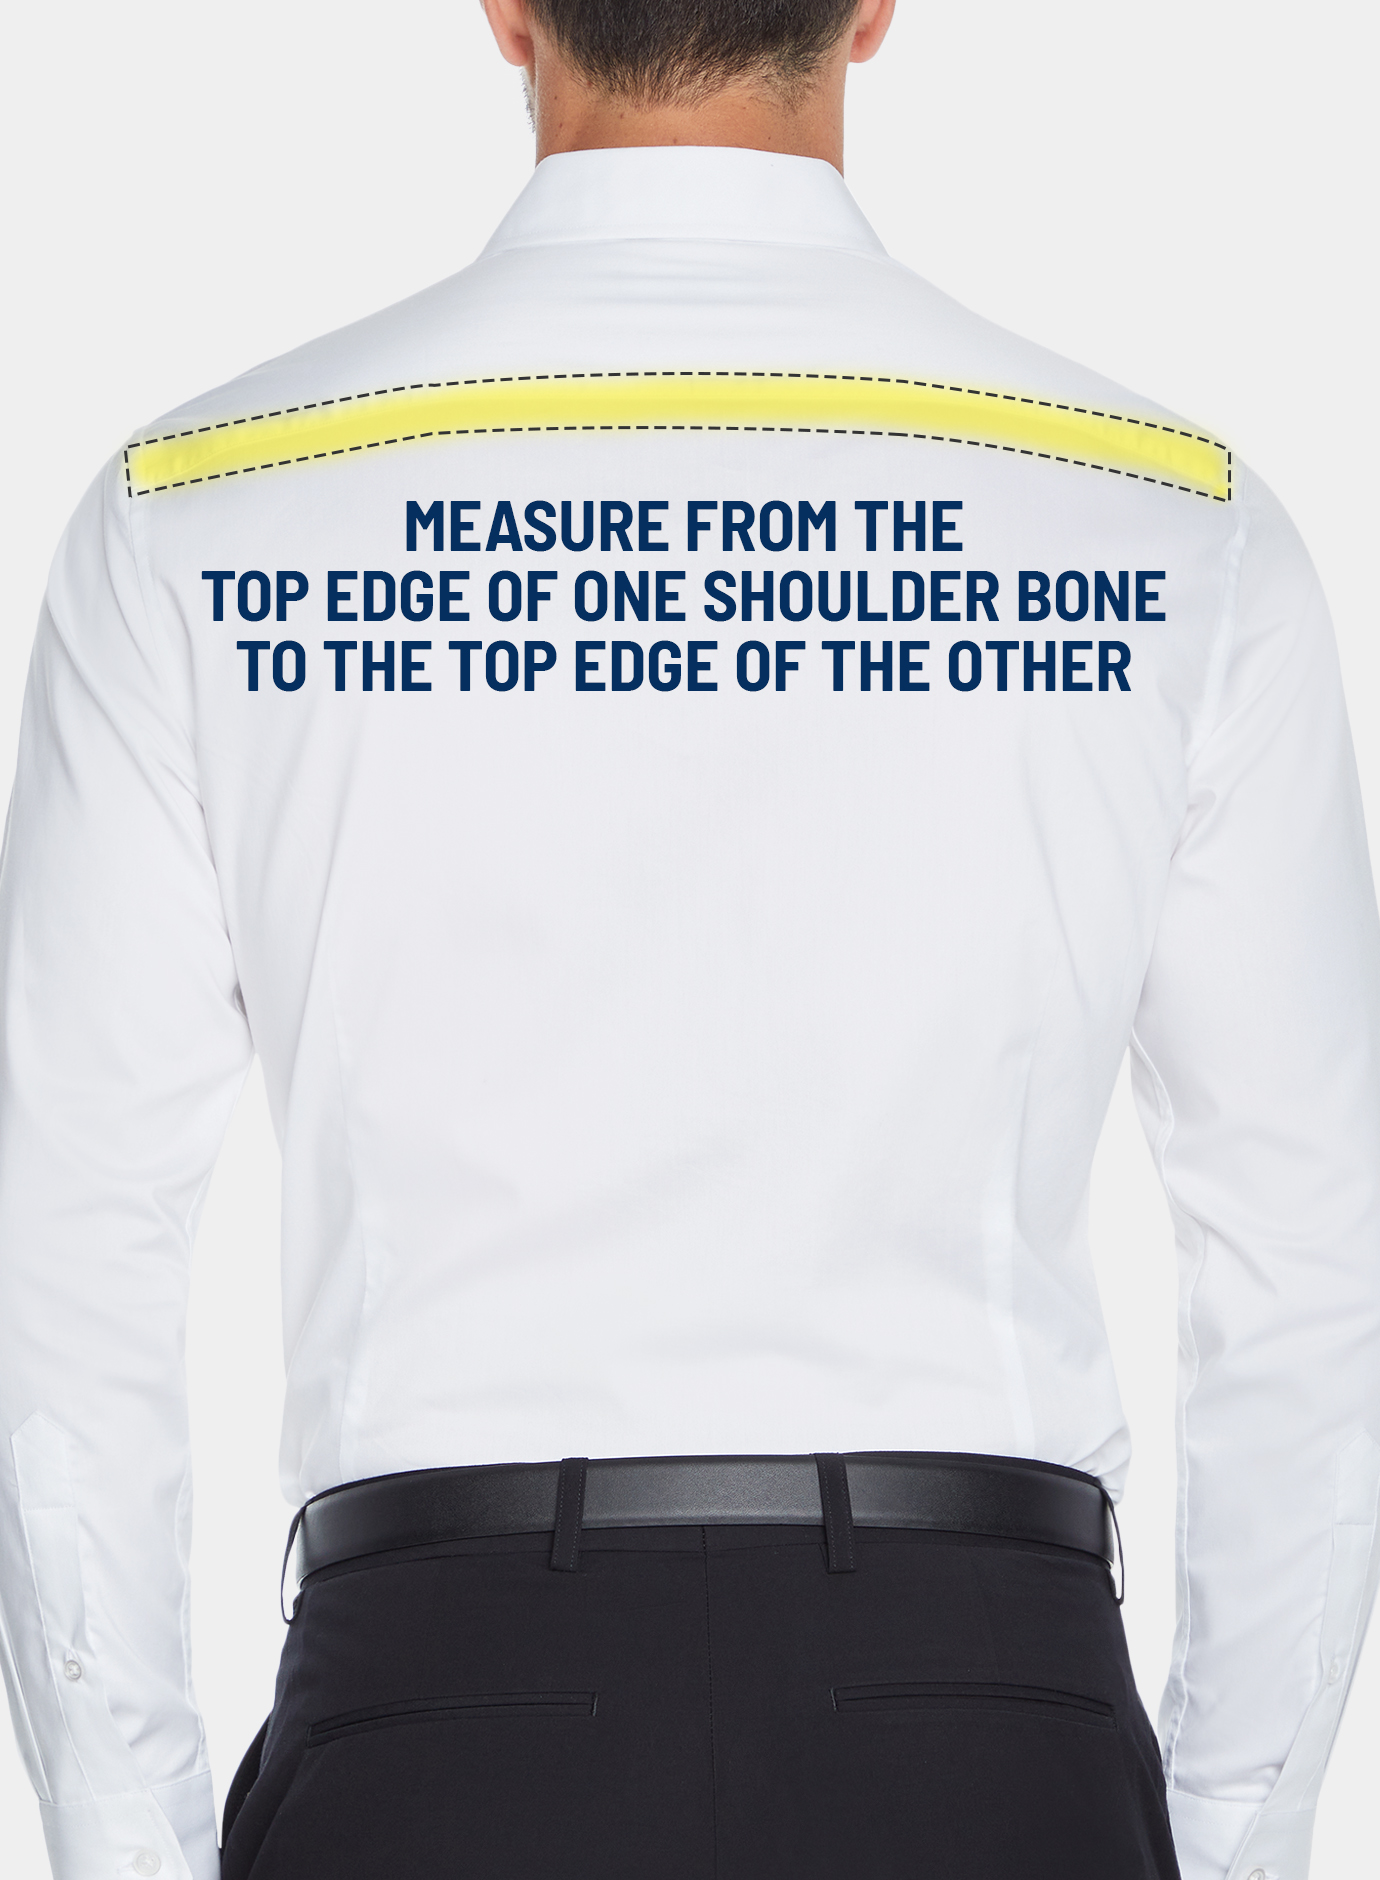 How to measure dress shirt's shoulder width